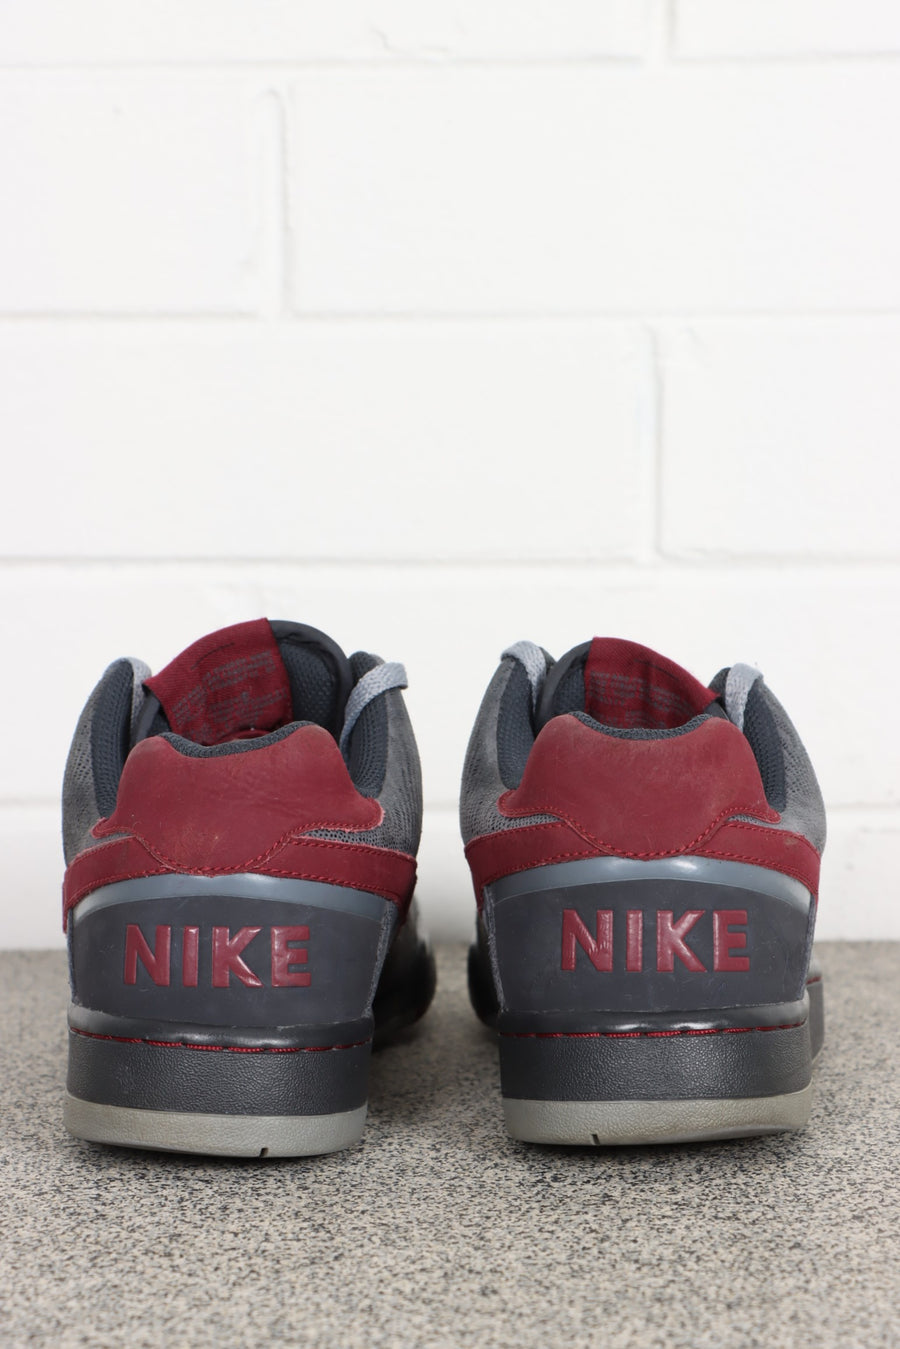 NIKE Delta Force Low Grey/Maroon Sneakers (8.5)